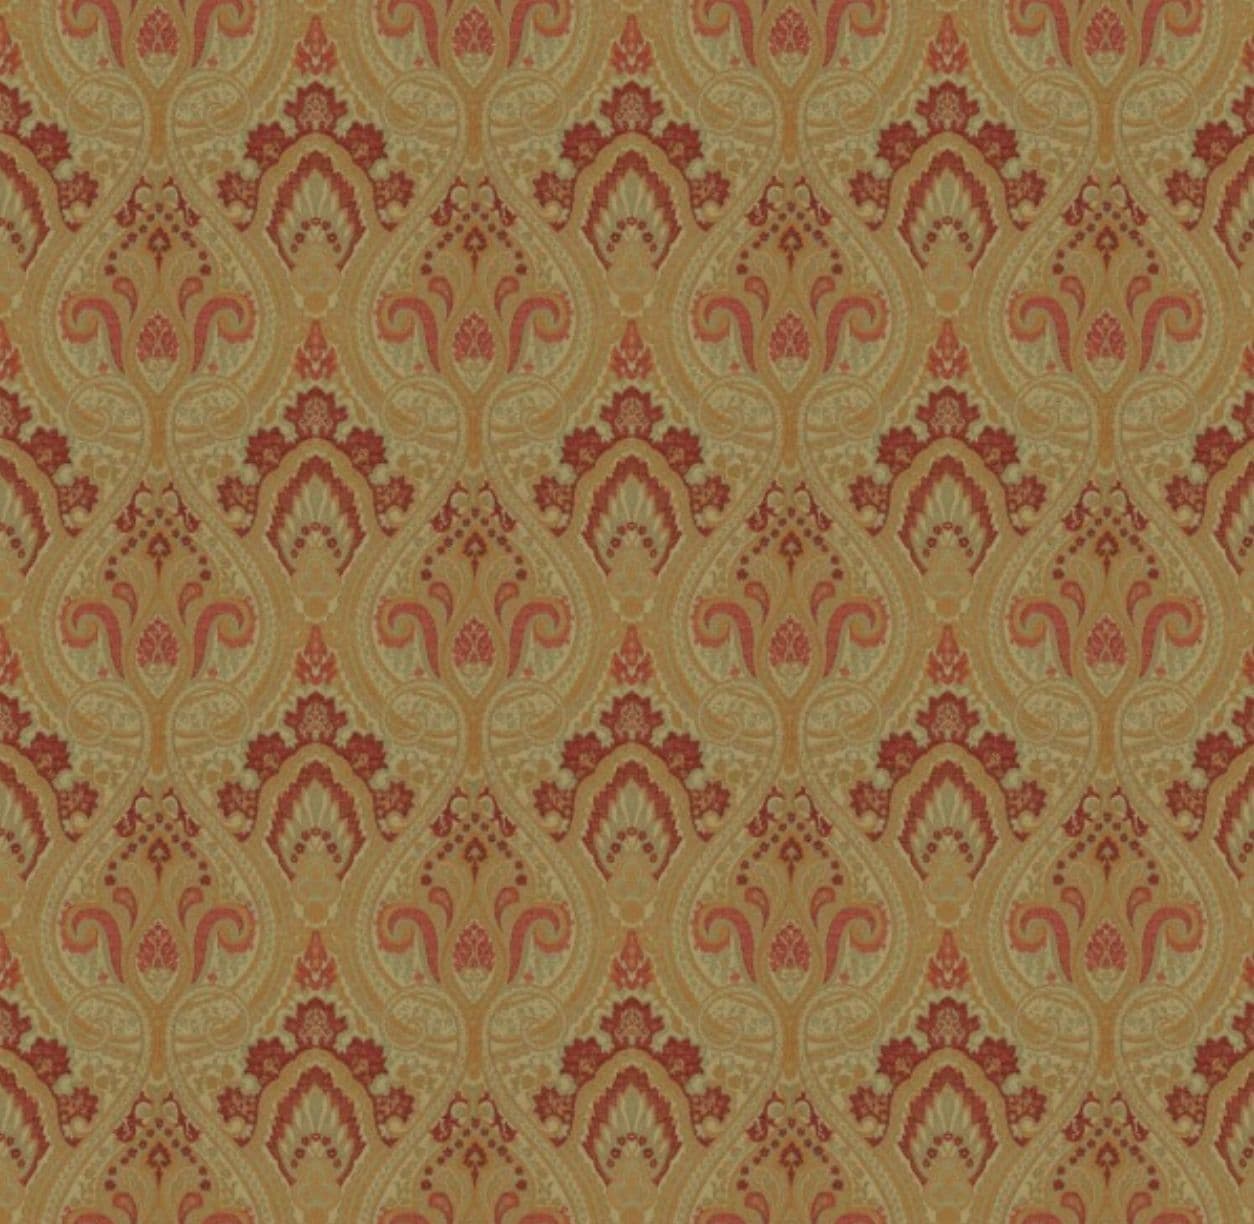 Jim Dickens Olympos Persia Fabric in Apple Red. 0.9  metres